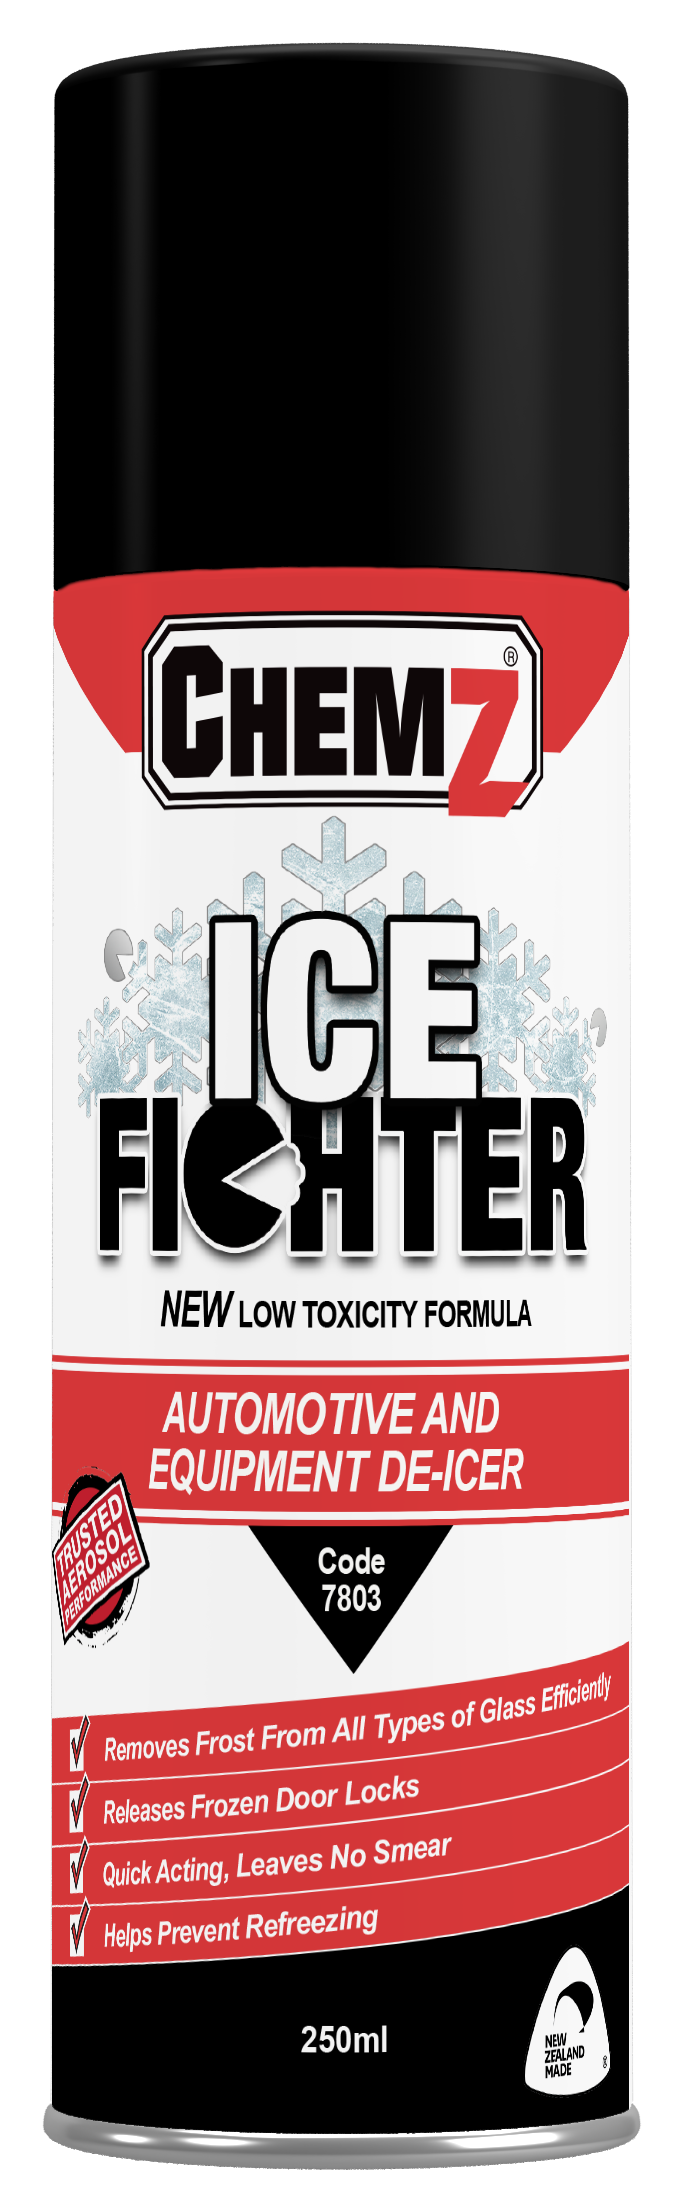 Chemz Ice Fighter